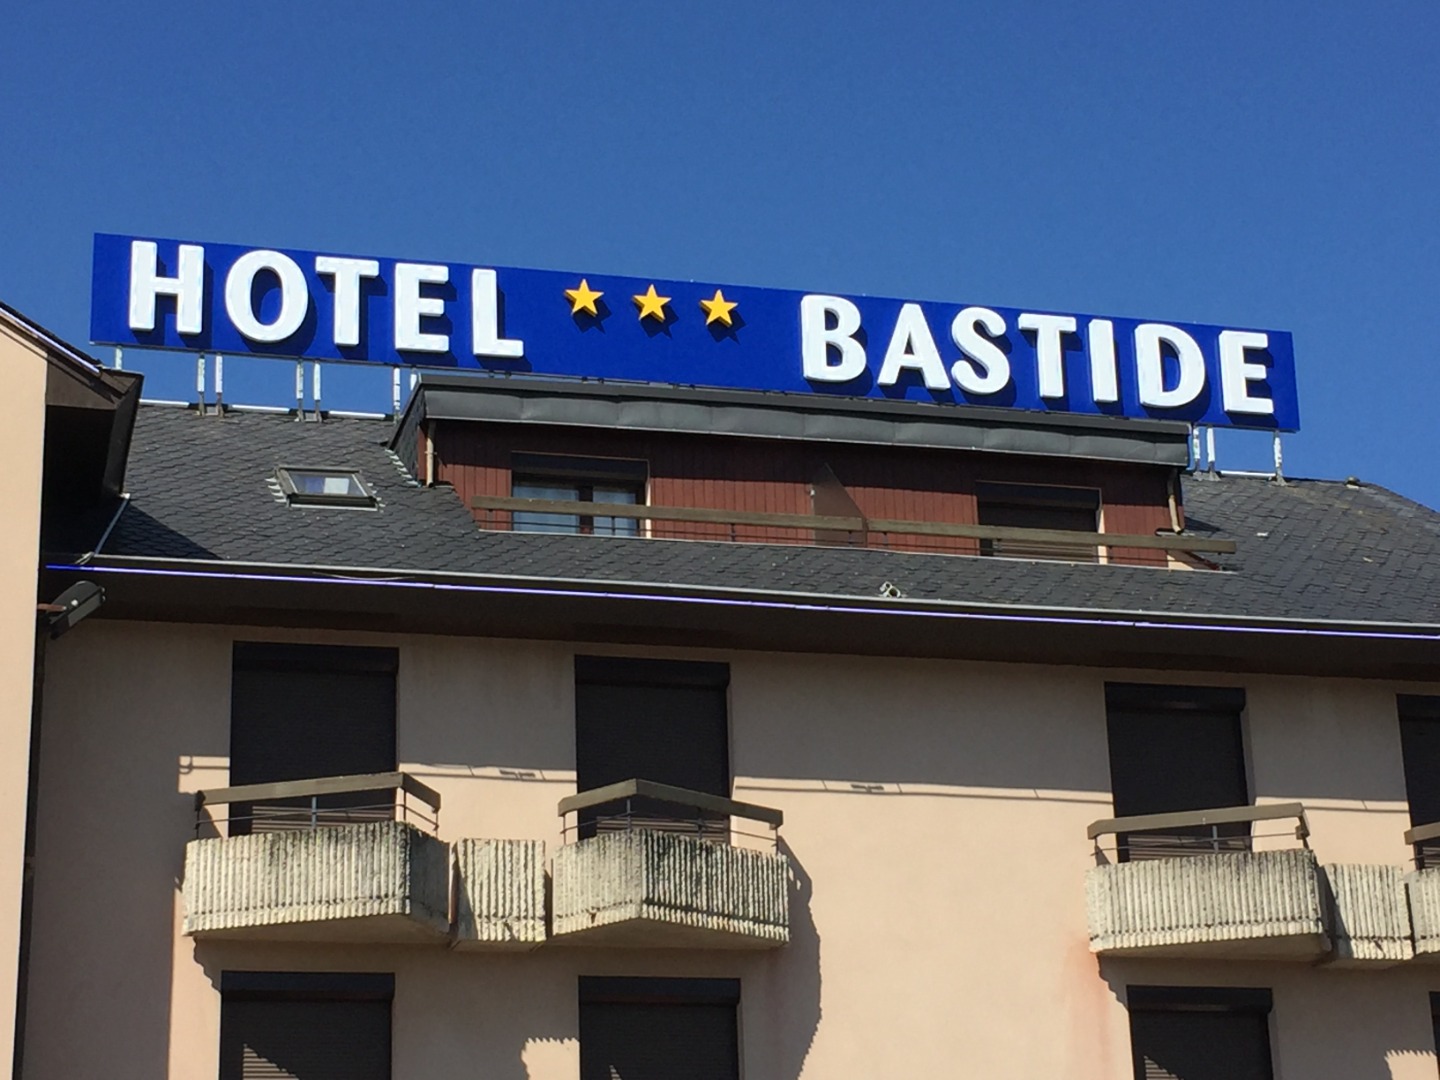 HOTEL BASTIDE RODEZ